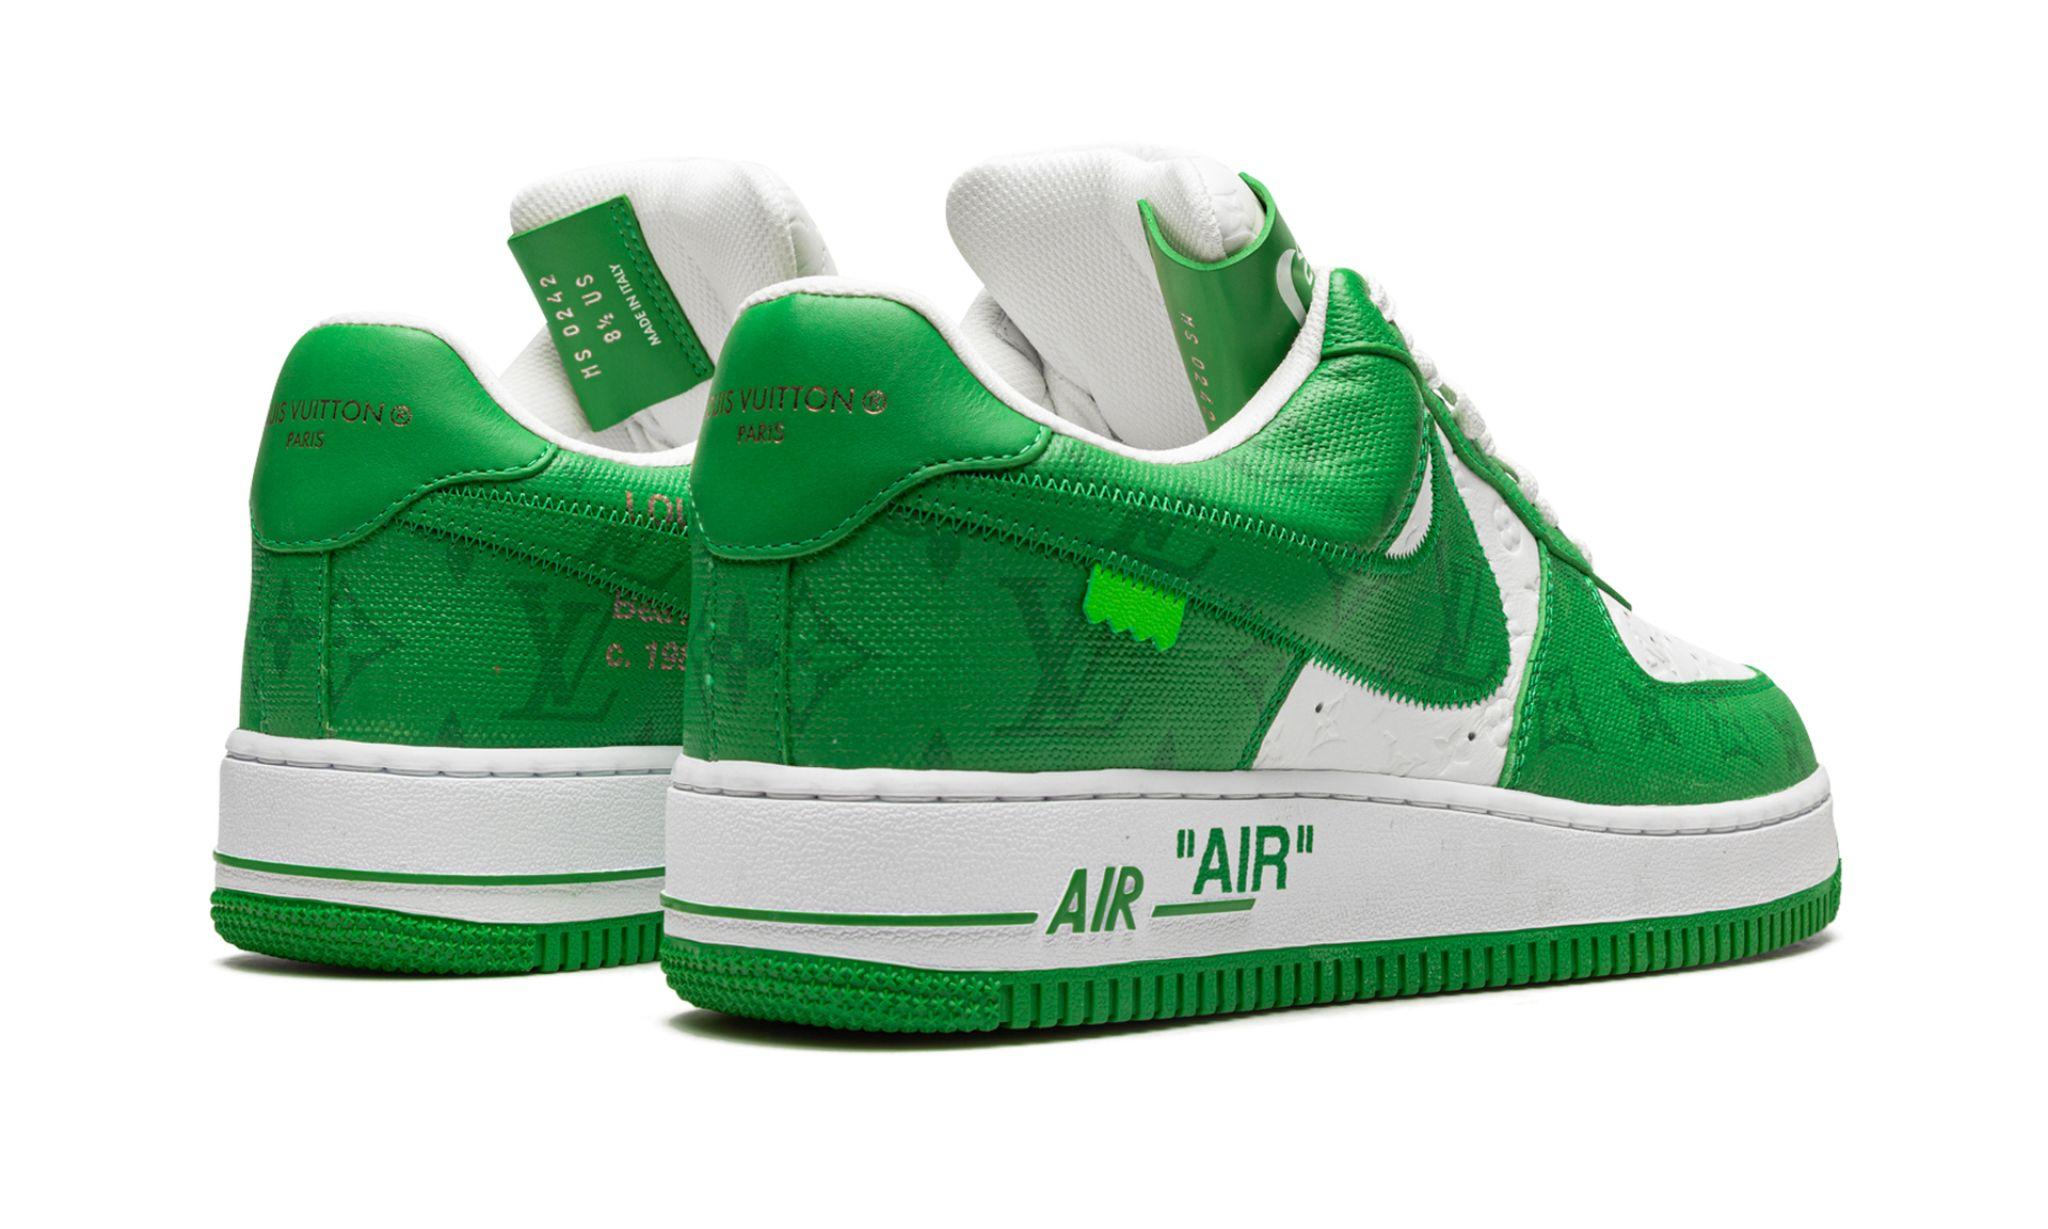 Nike Louis Vuitton Air Force 1 Low virgil Abloh in Green for Men